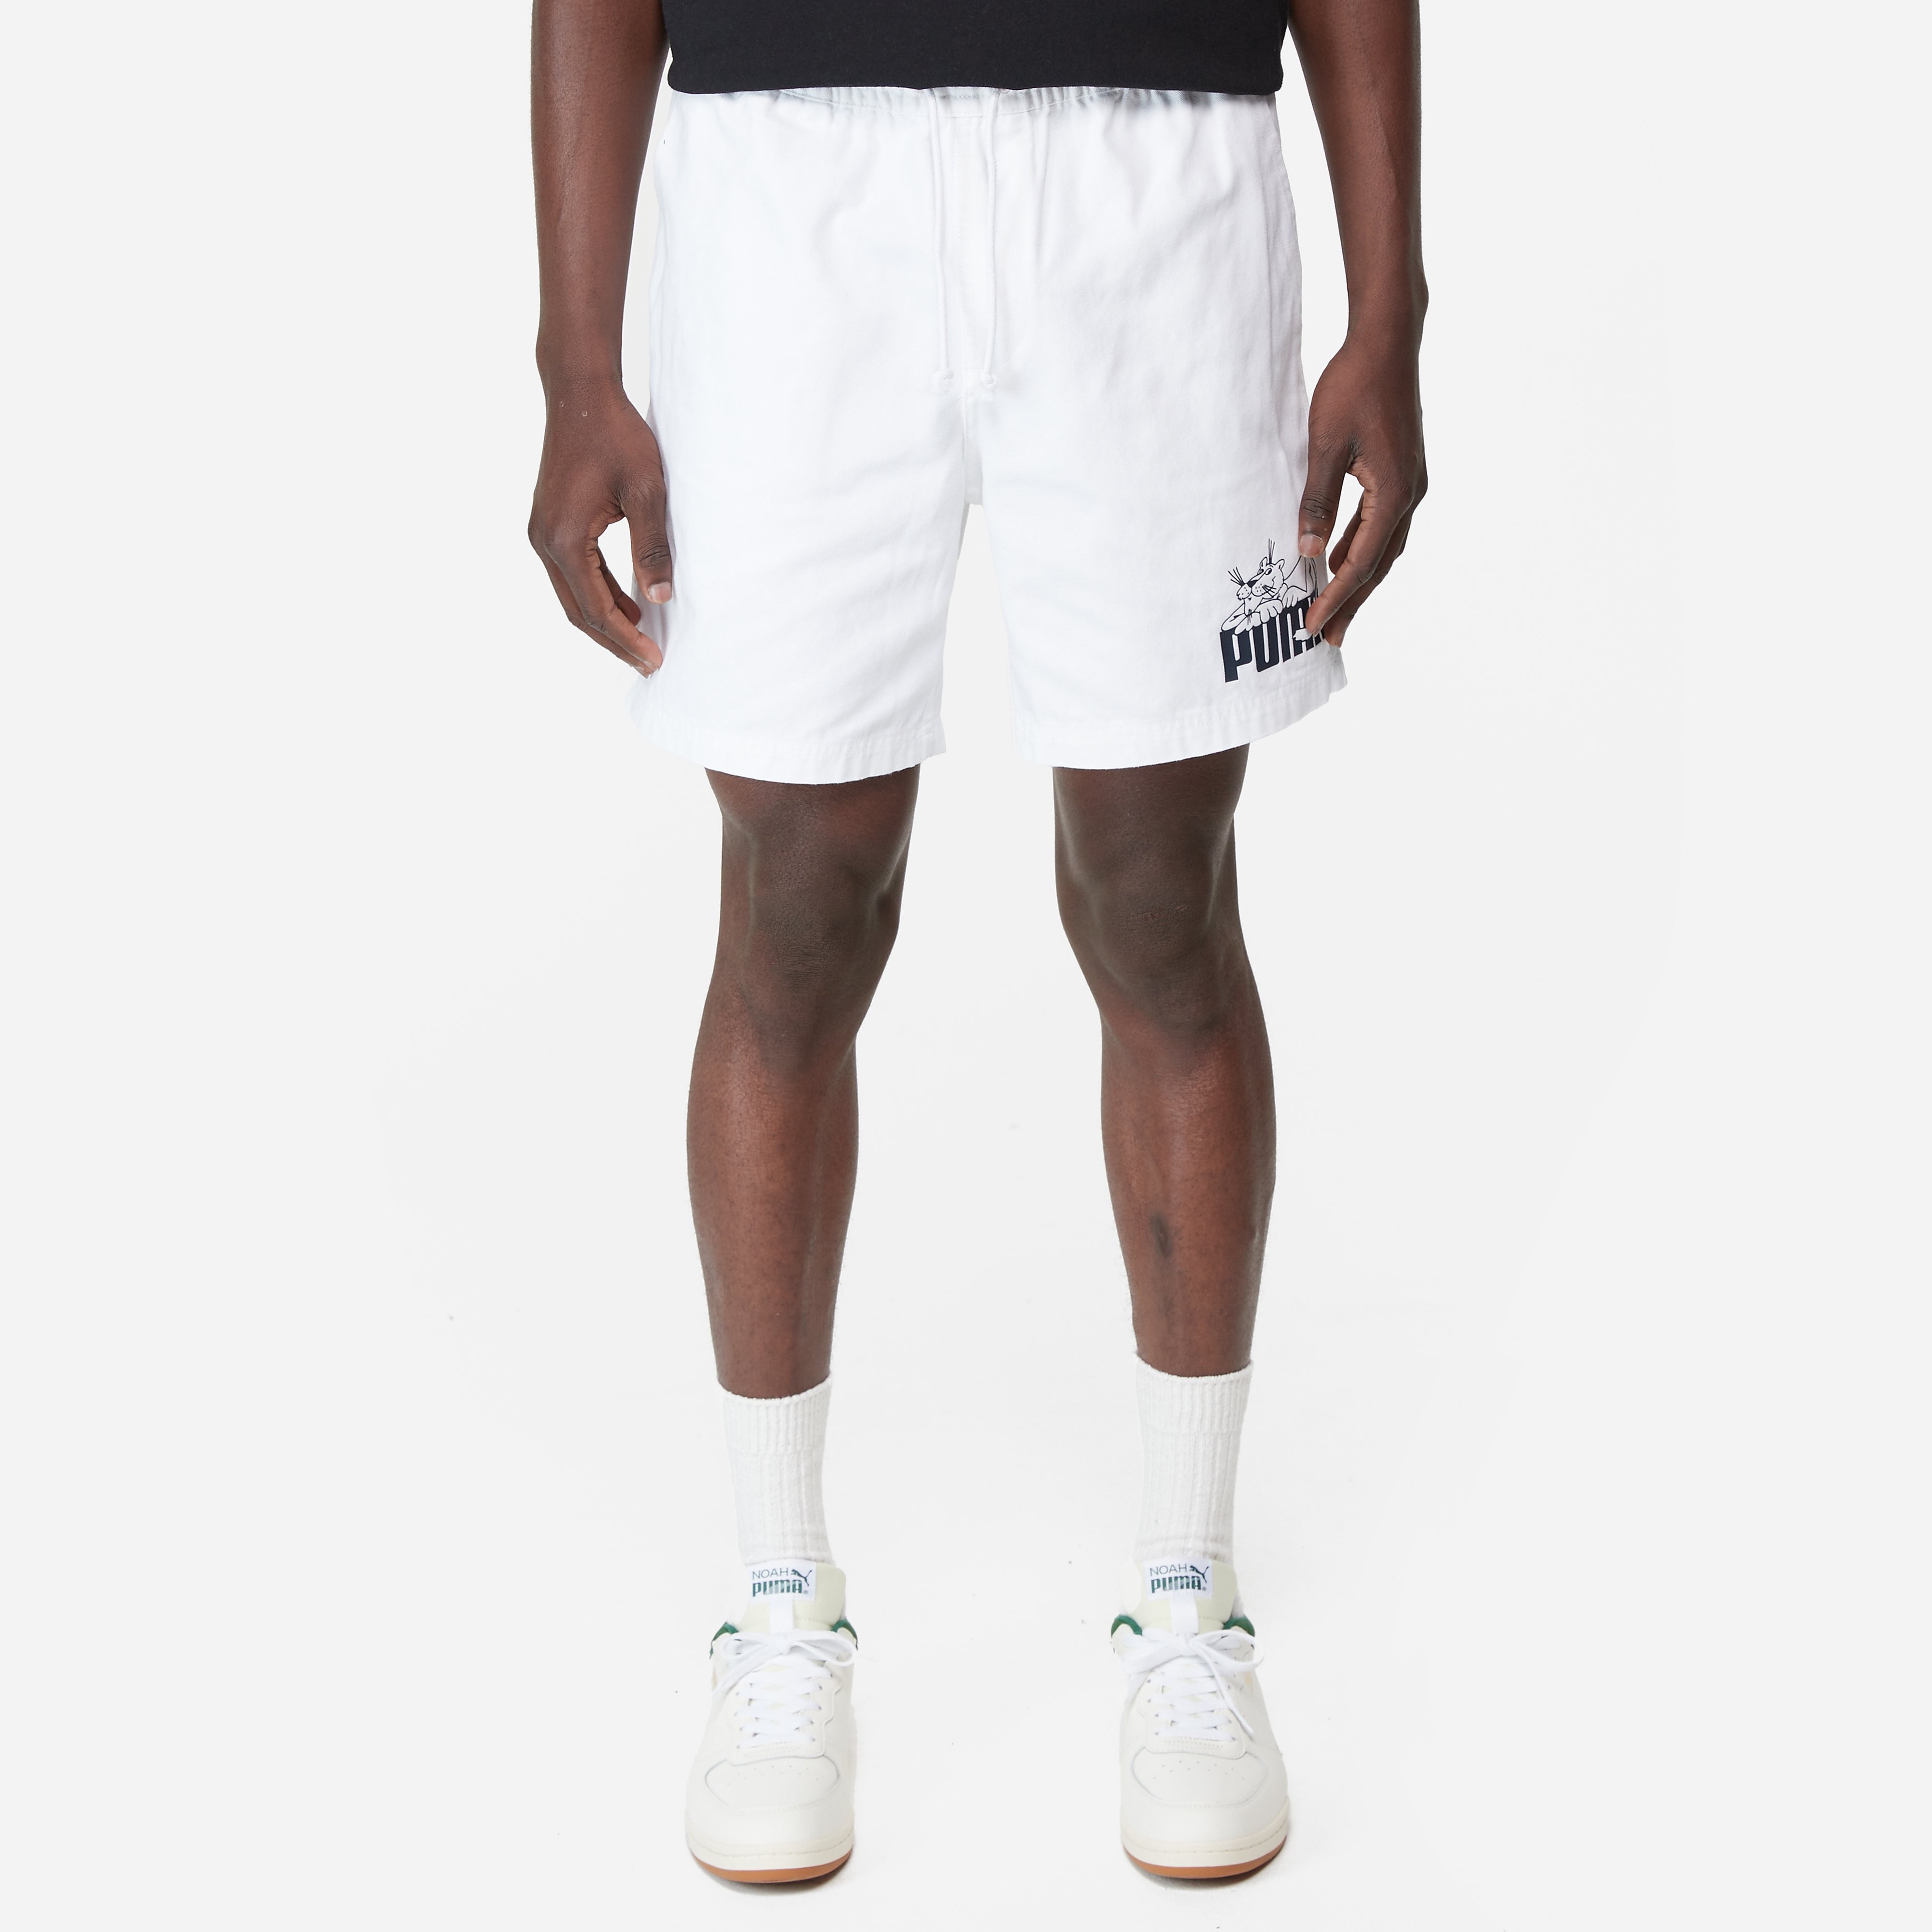 puma x noah shorts, white